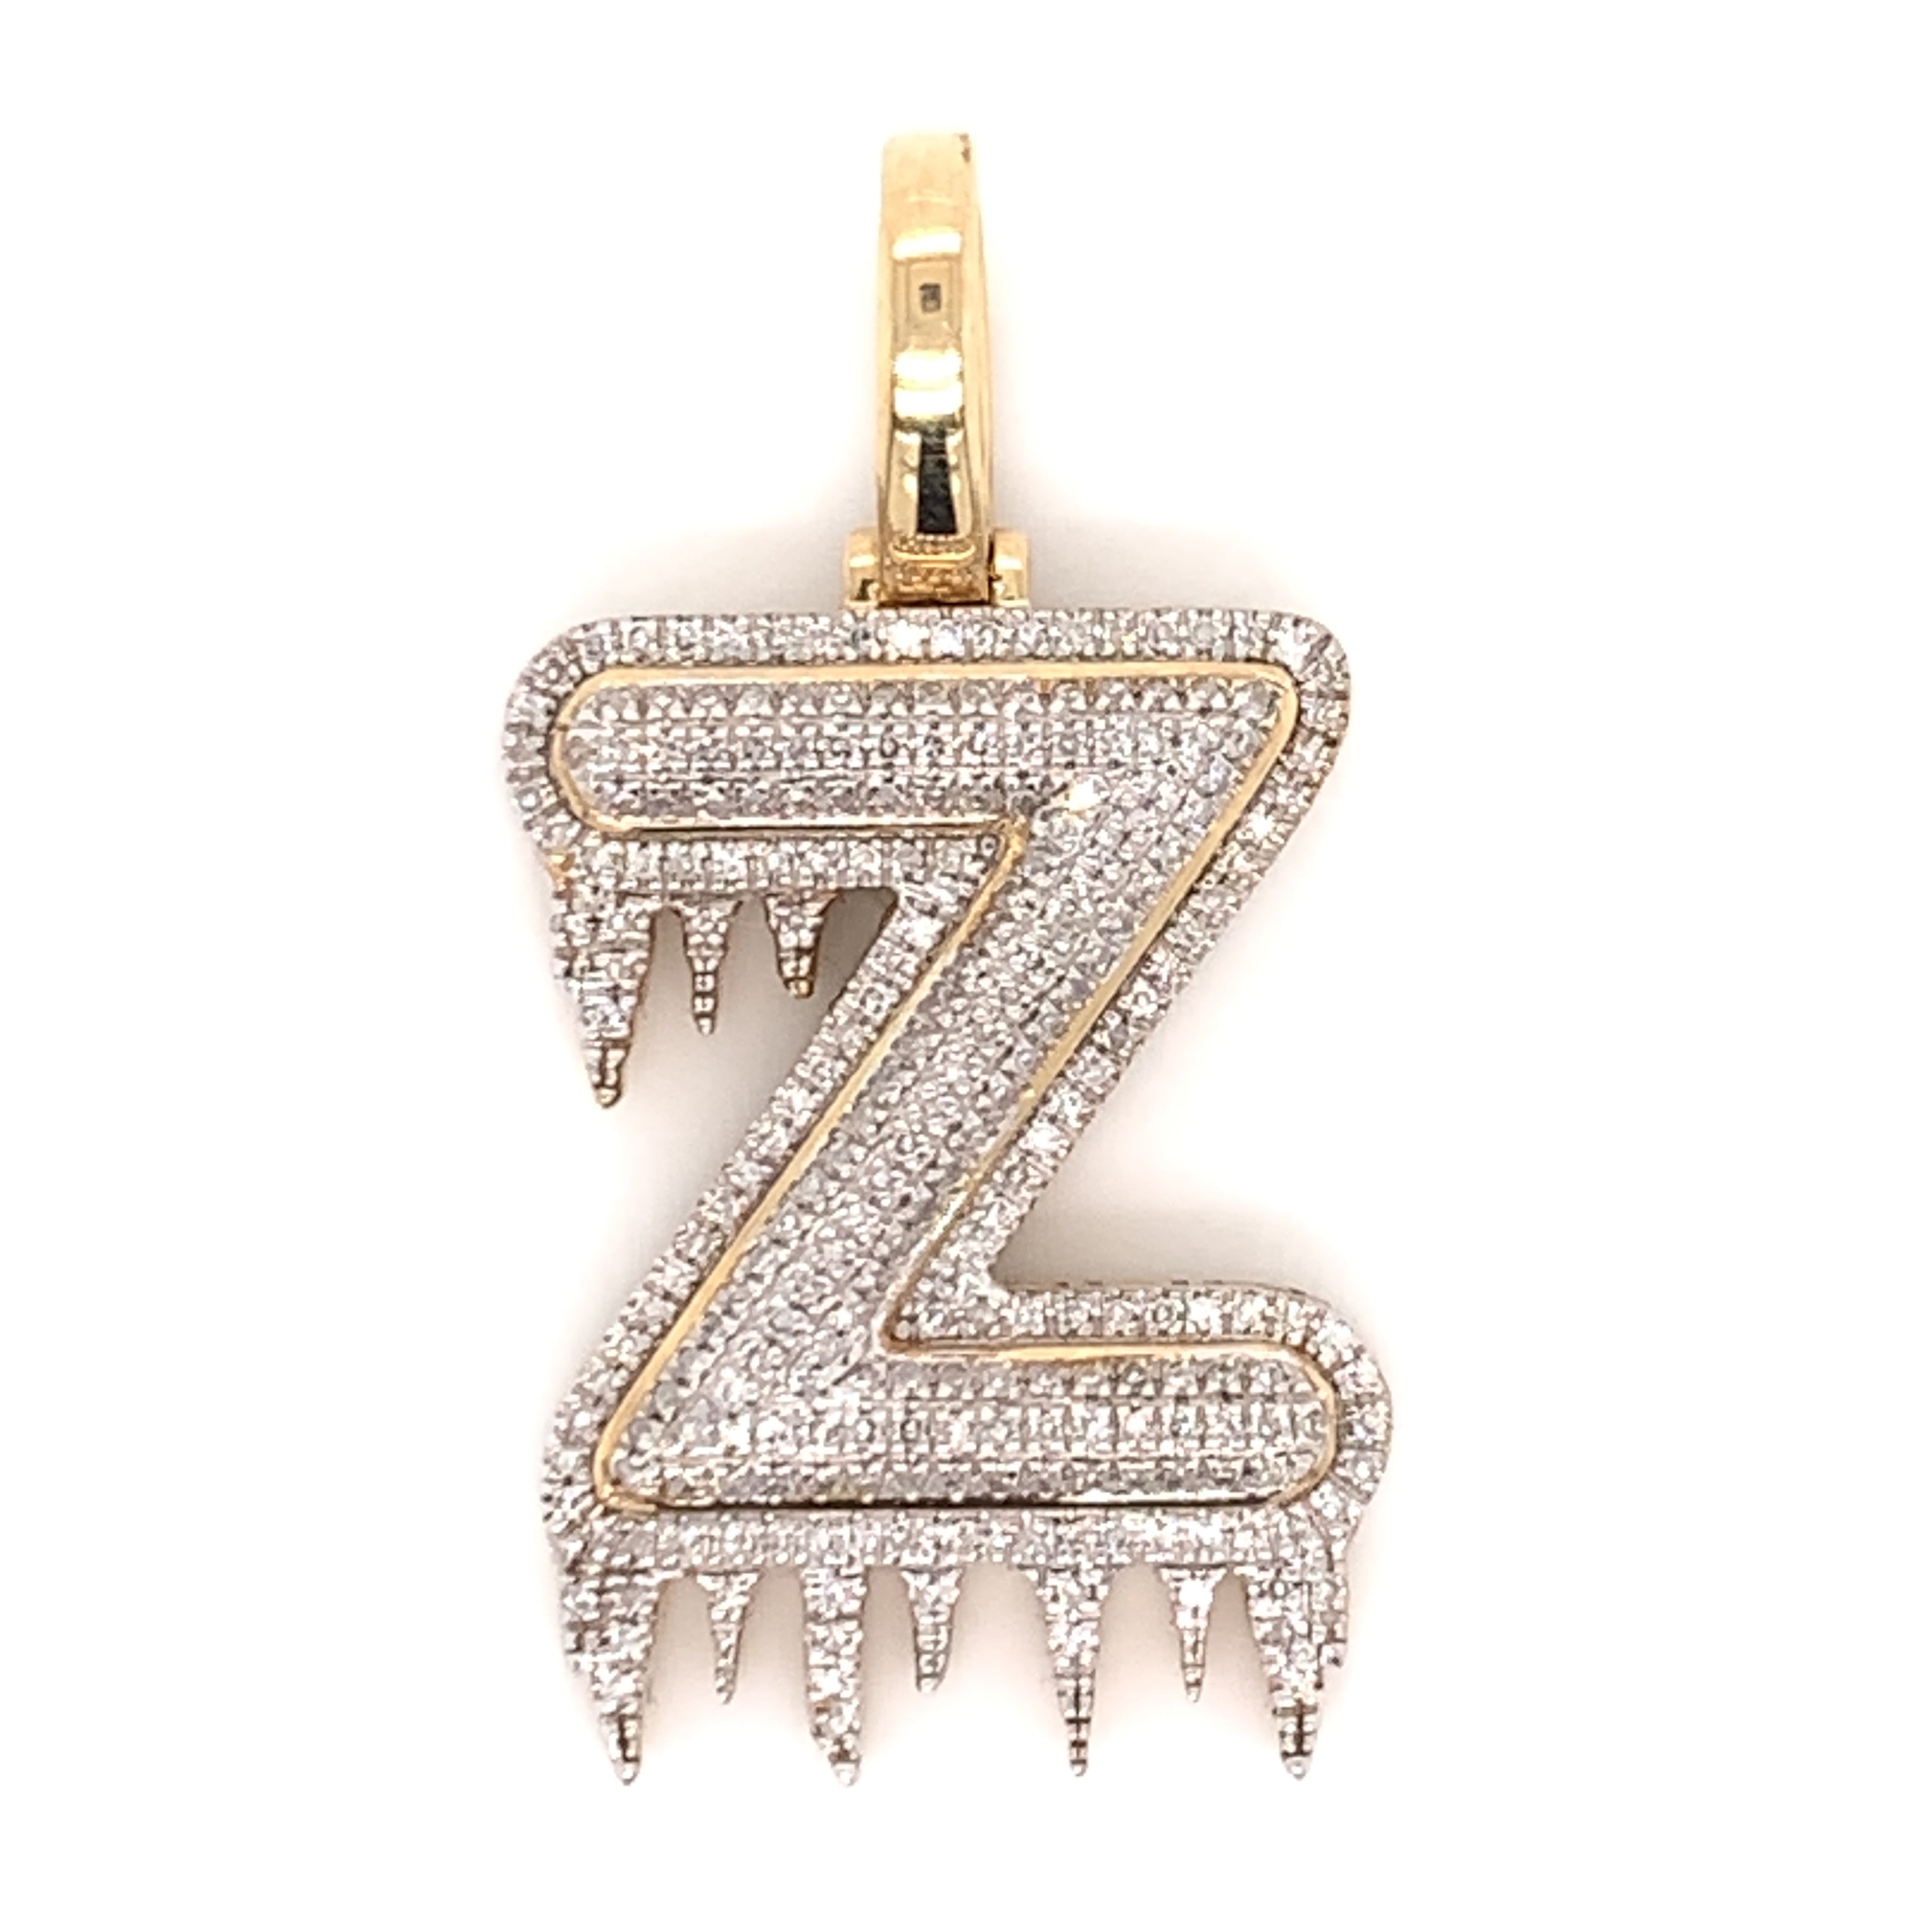 0.46 CT. Diamond Letter "Z" Pendant in 10K Gold - White Carat - USA & Canada